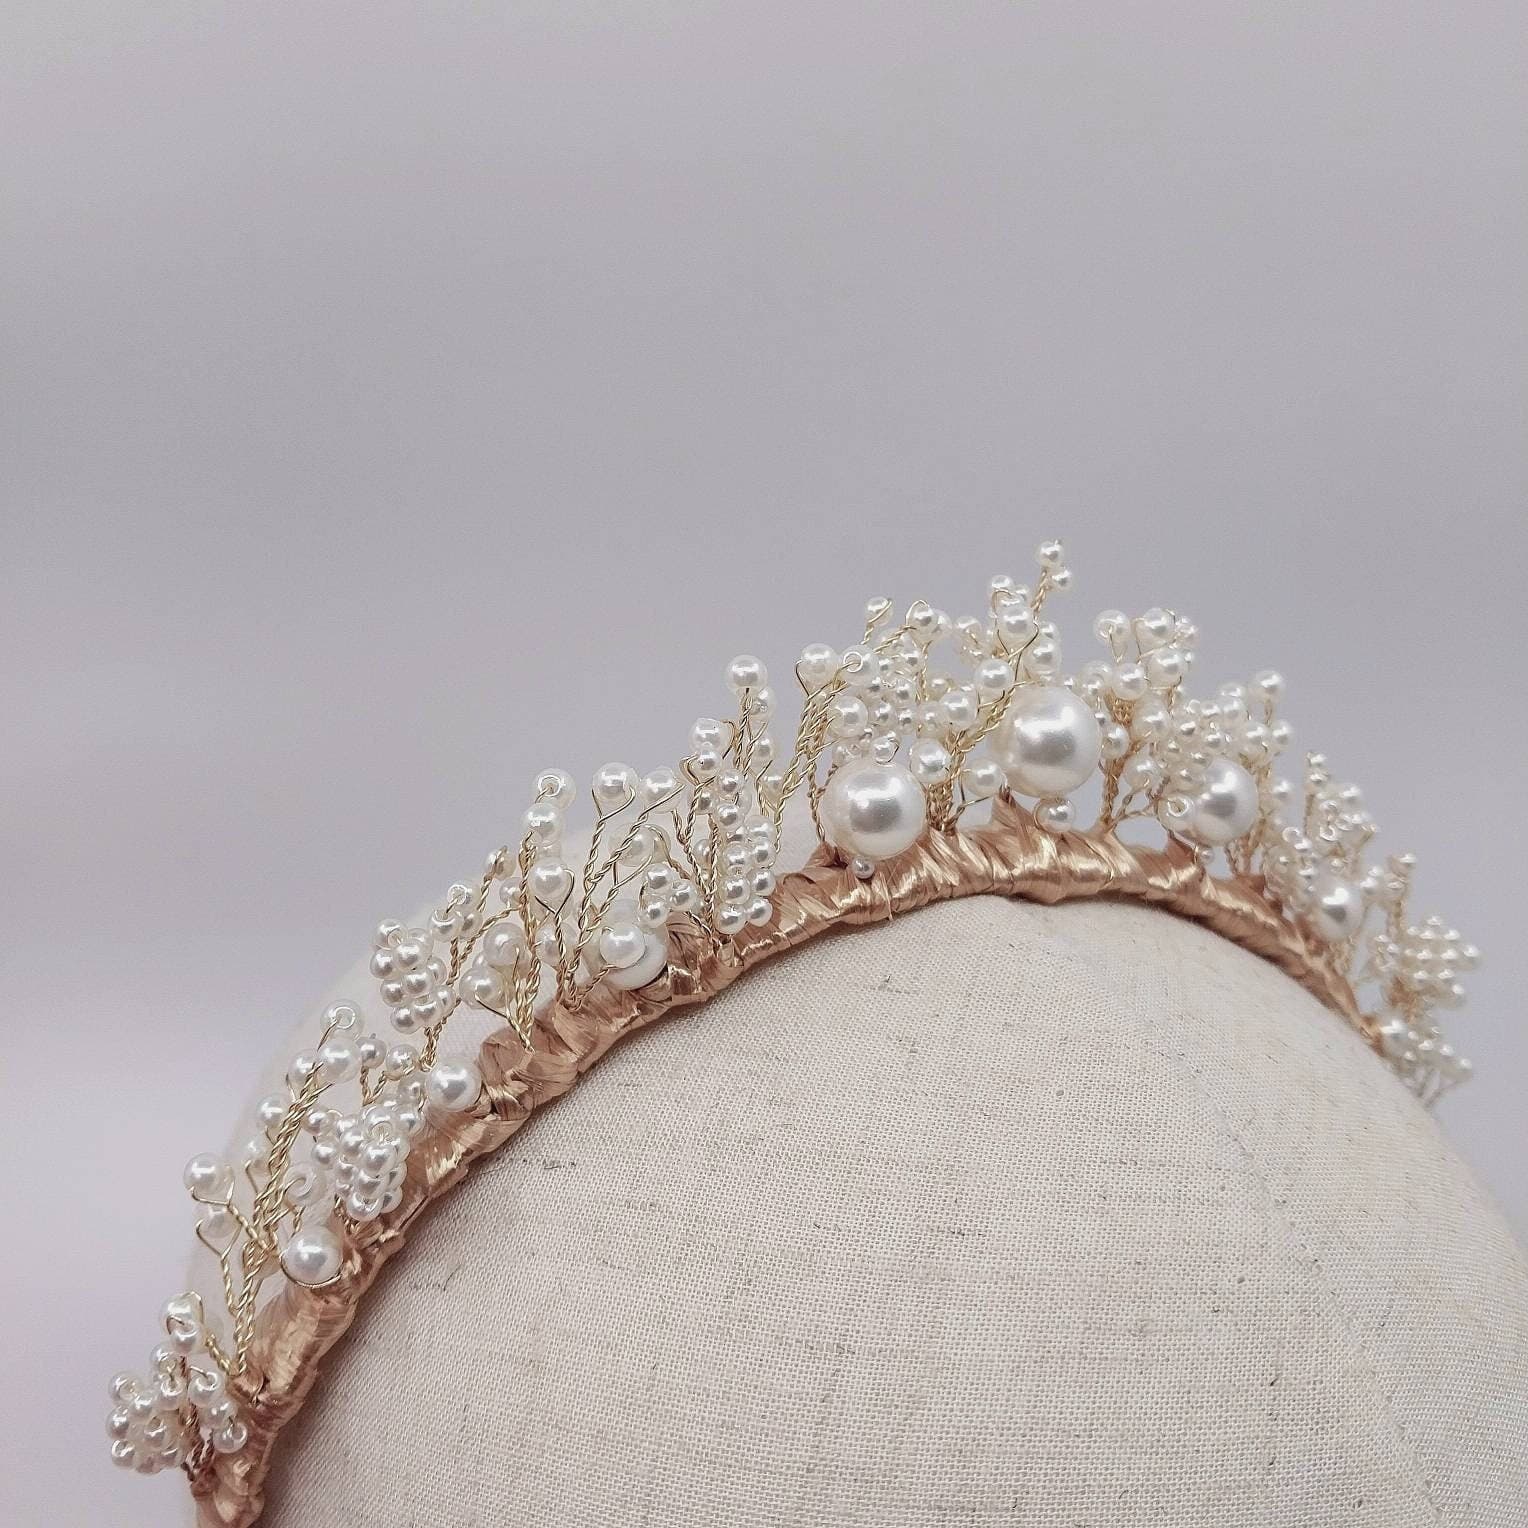 FLUER Cream white Pearl Headband Bridal Wedding headpiece hairband handmade handcrafted hair accessories Australia pearls bride weddings